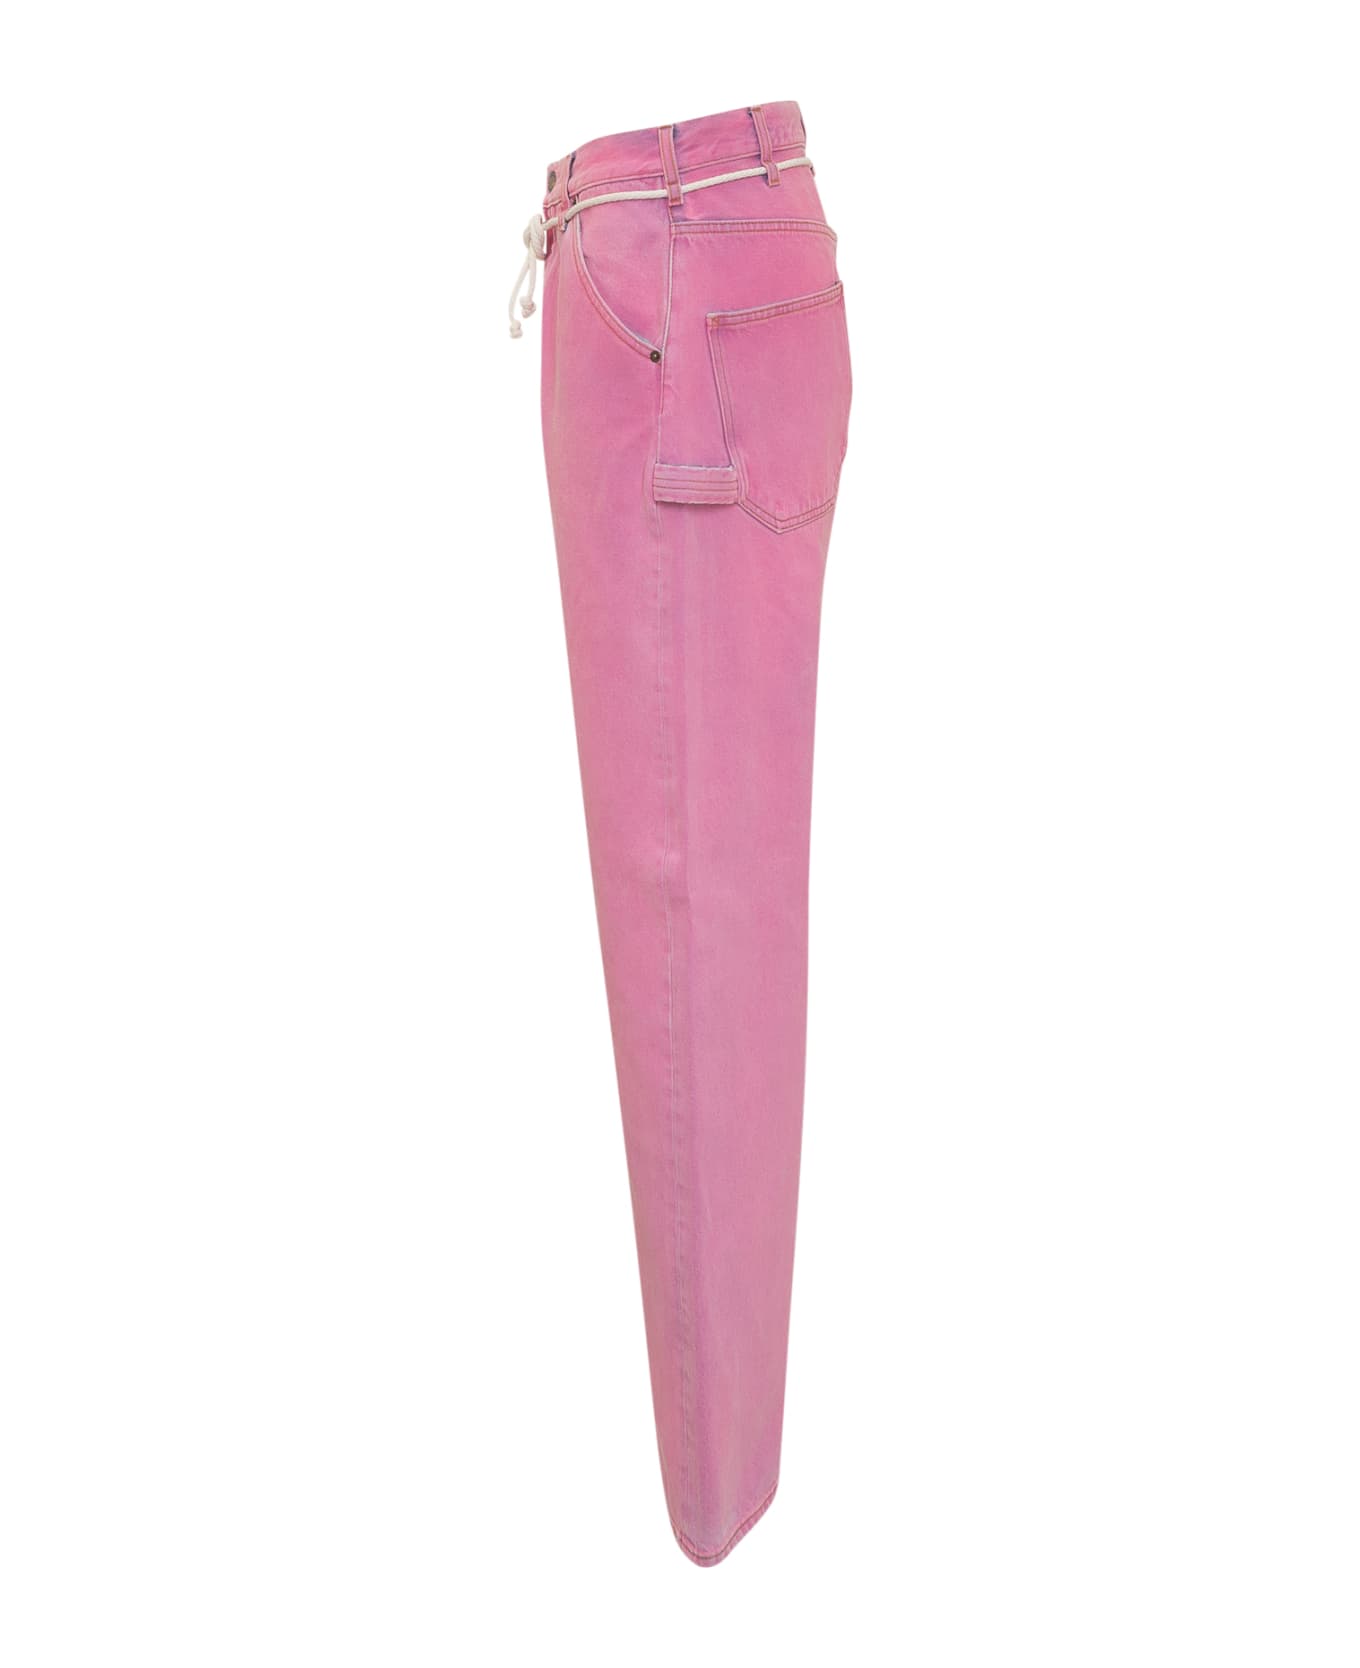 DARKPARK Iris Oversized Jeans - ACID PINK